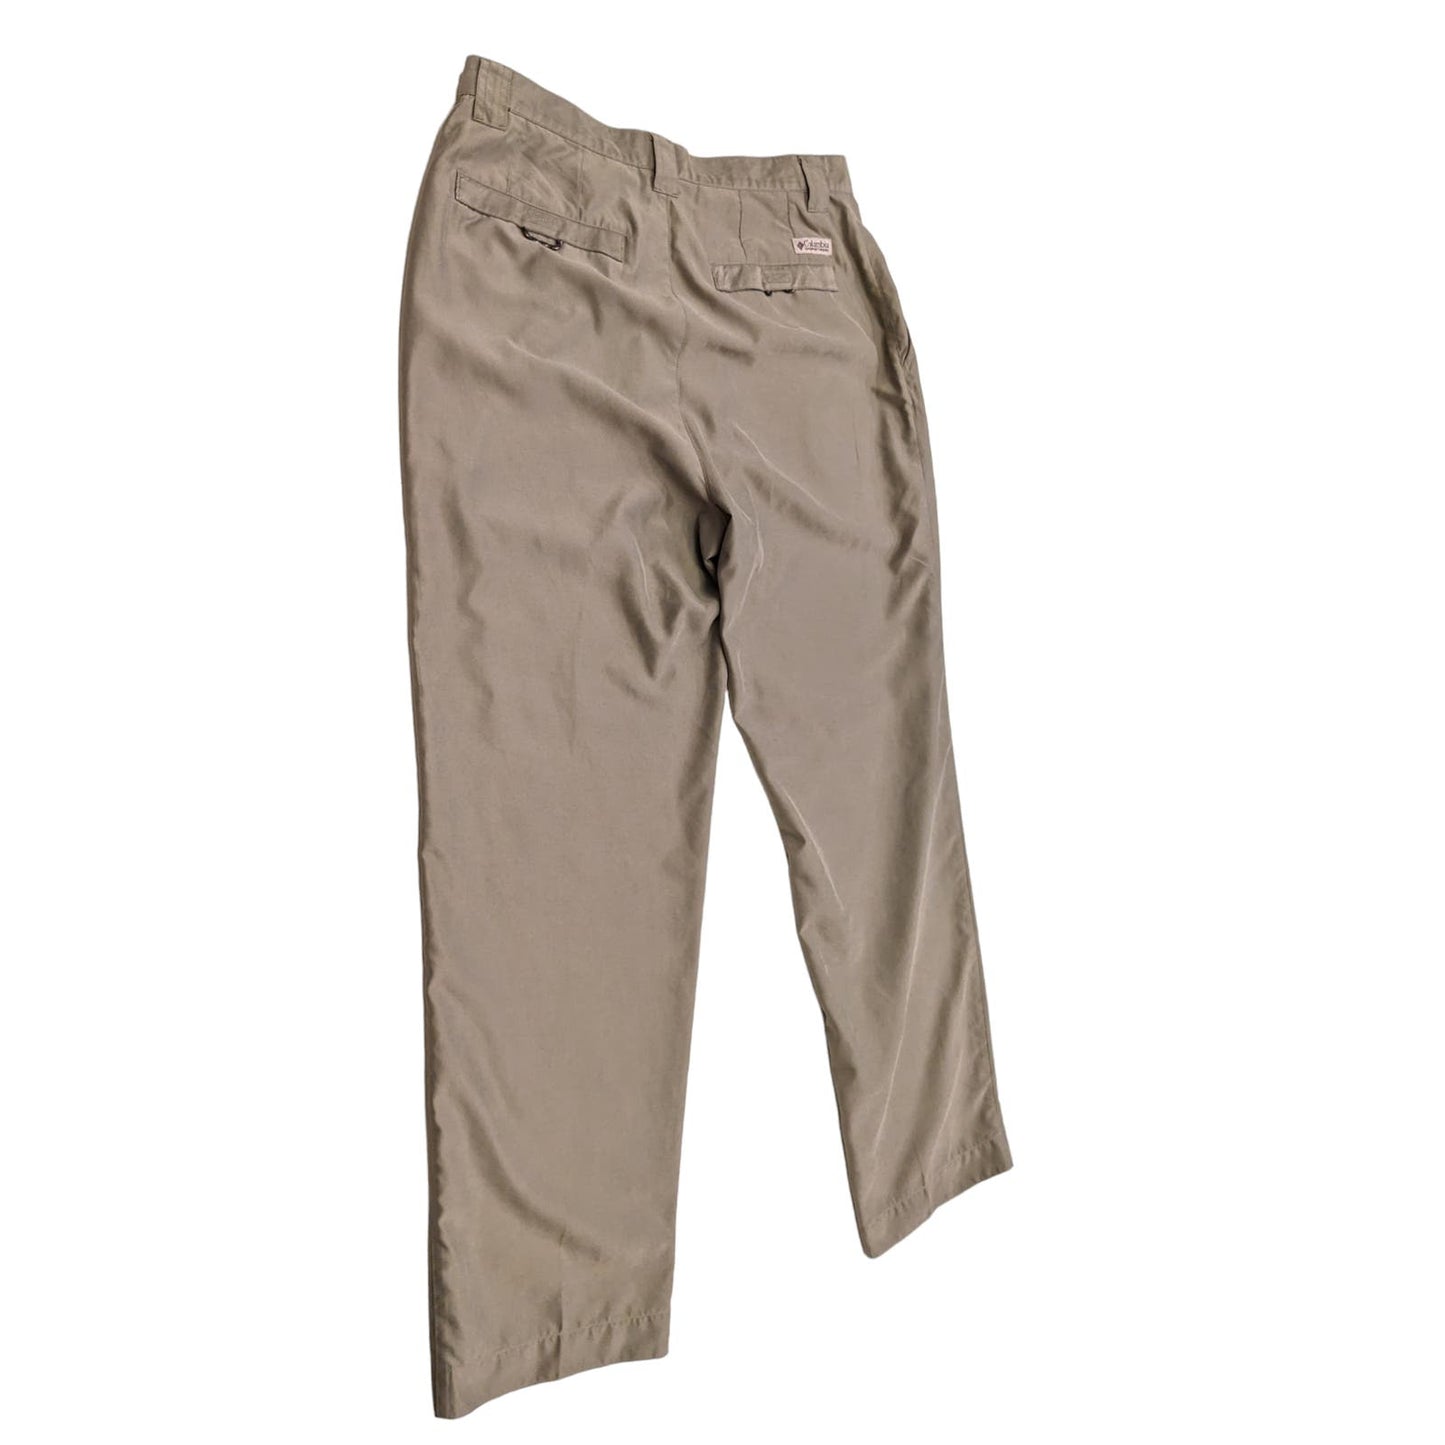 Columbia Sportswear Pants Mens Size 36x32 Khaki Lightweight TM8026